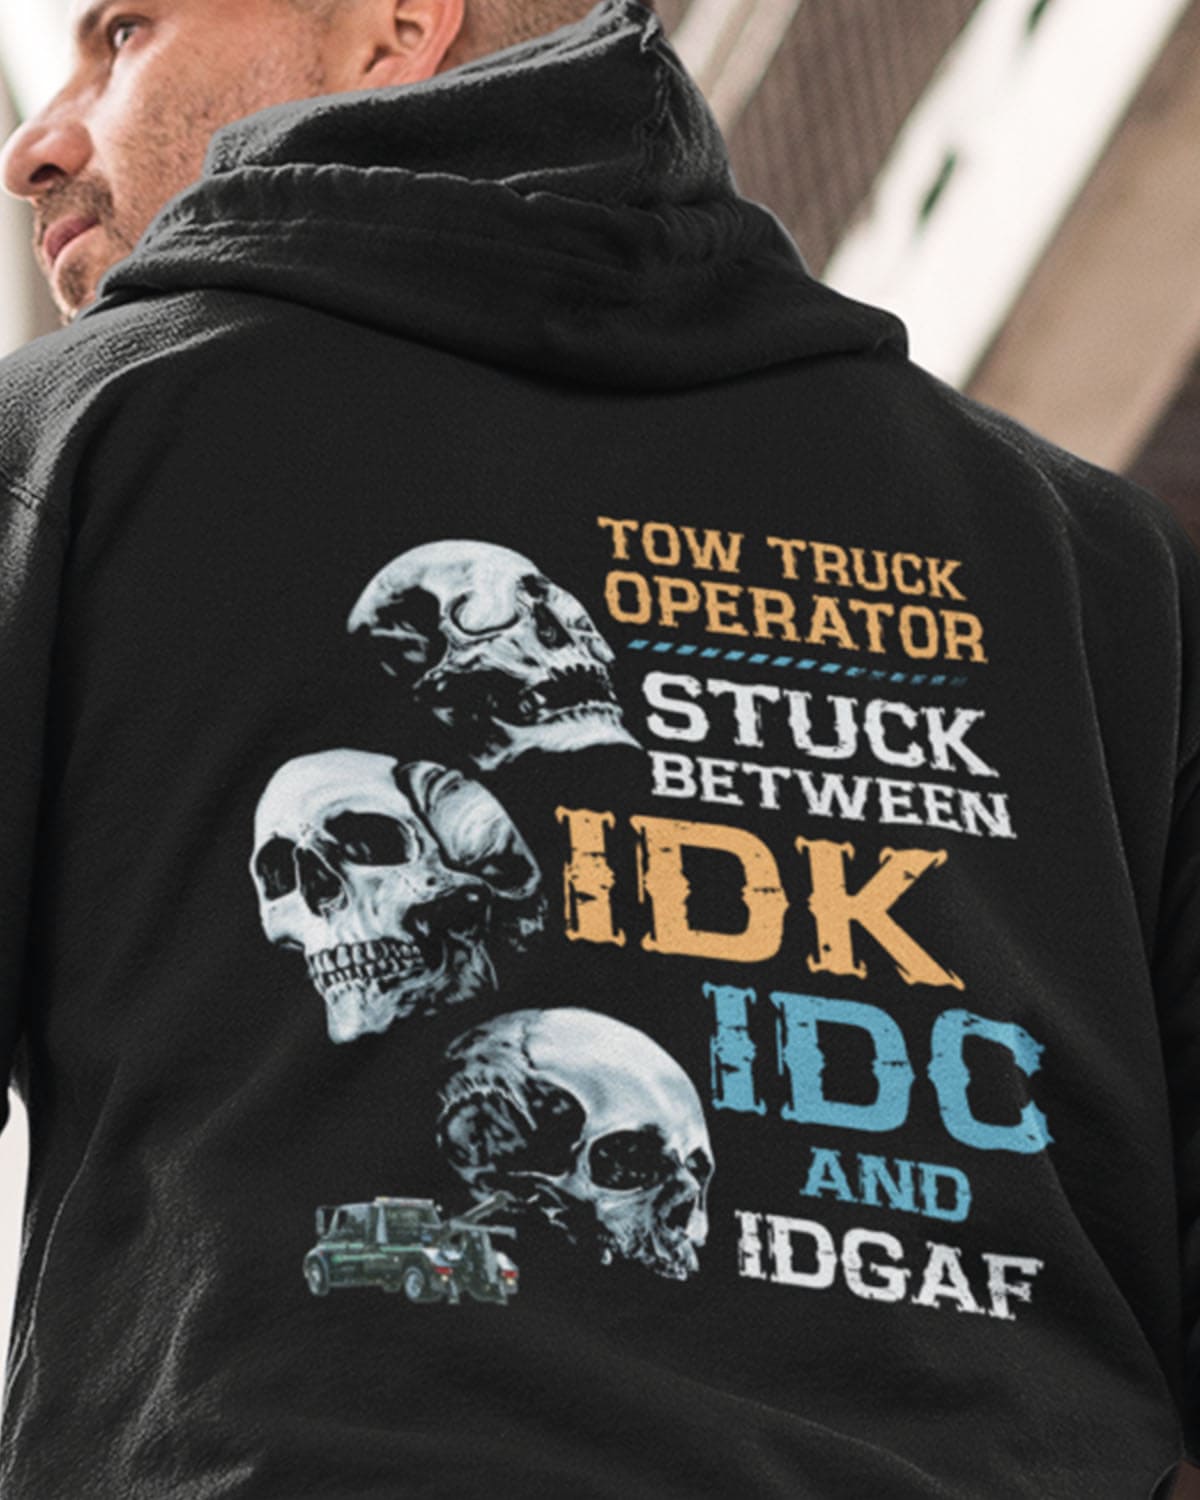 Tow Truck Operator Skull - Tow truck operator stuck between idk idc and idgaf